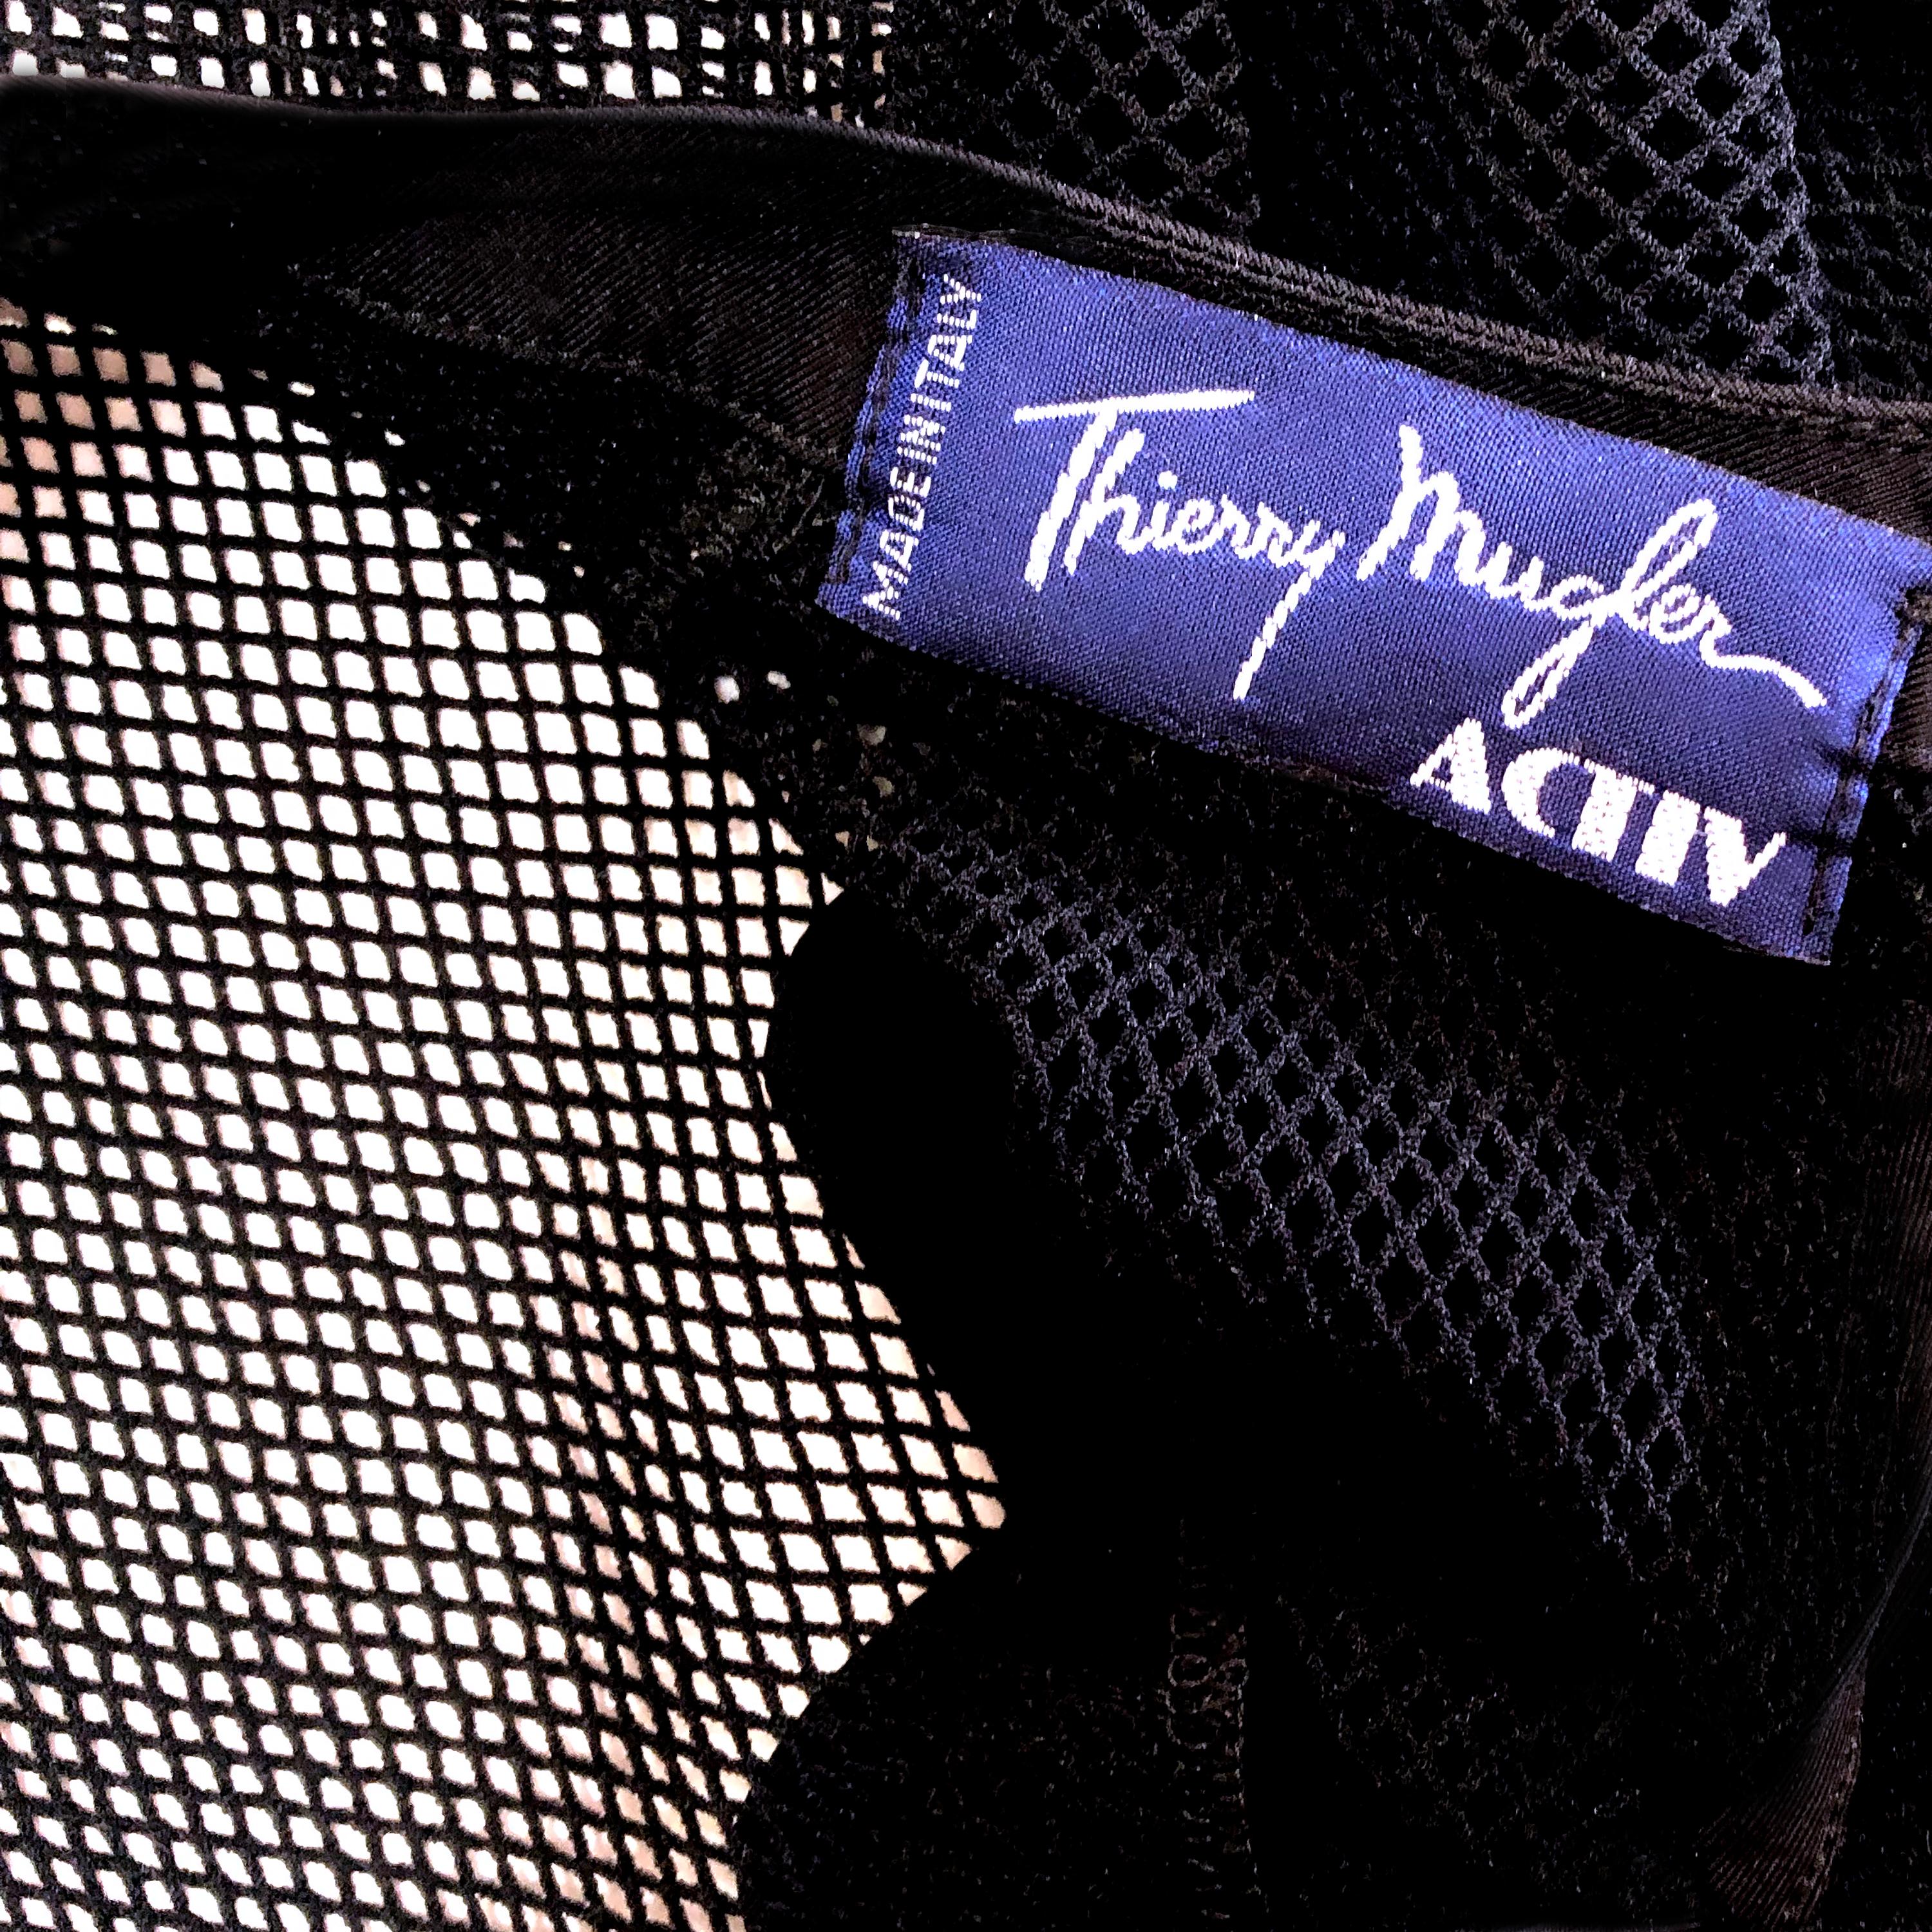 Thierry Mugler Dress - 1980s Vintage - Scalloped Hem + Stretch Fishnet Details 4